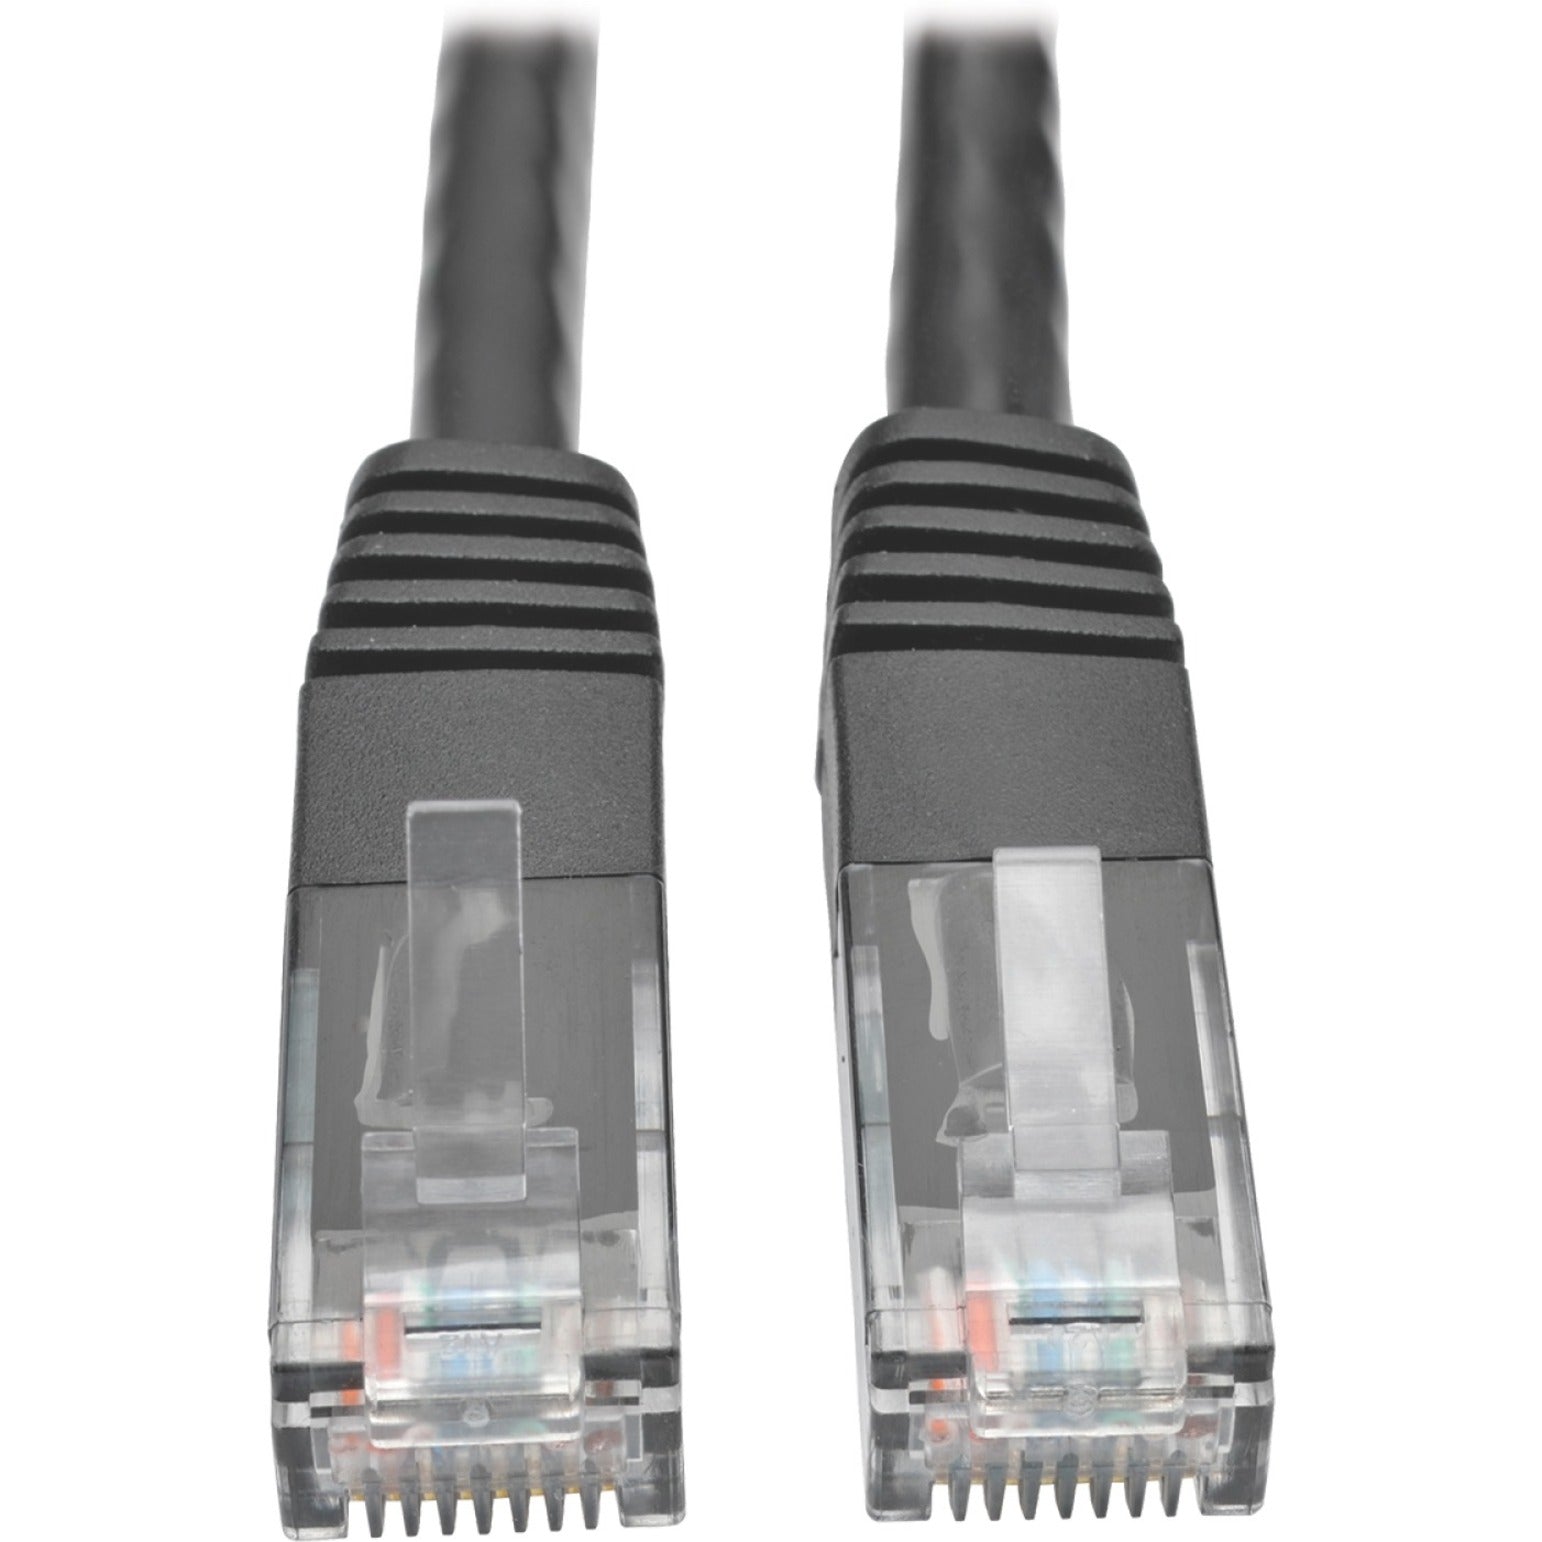 Tripp Lite by Eaton (N200020BK) Connector Cable (N200-020-BK)